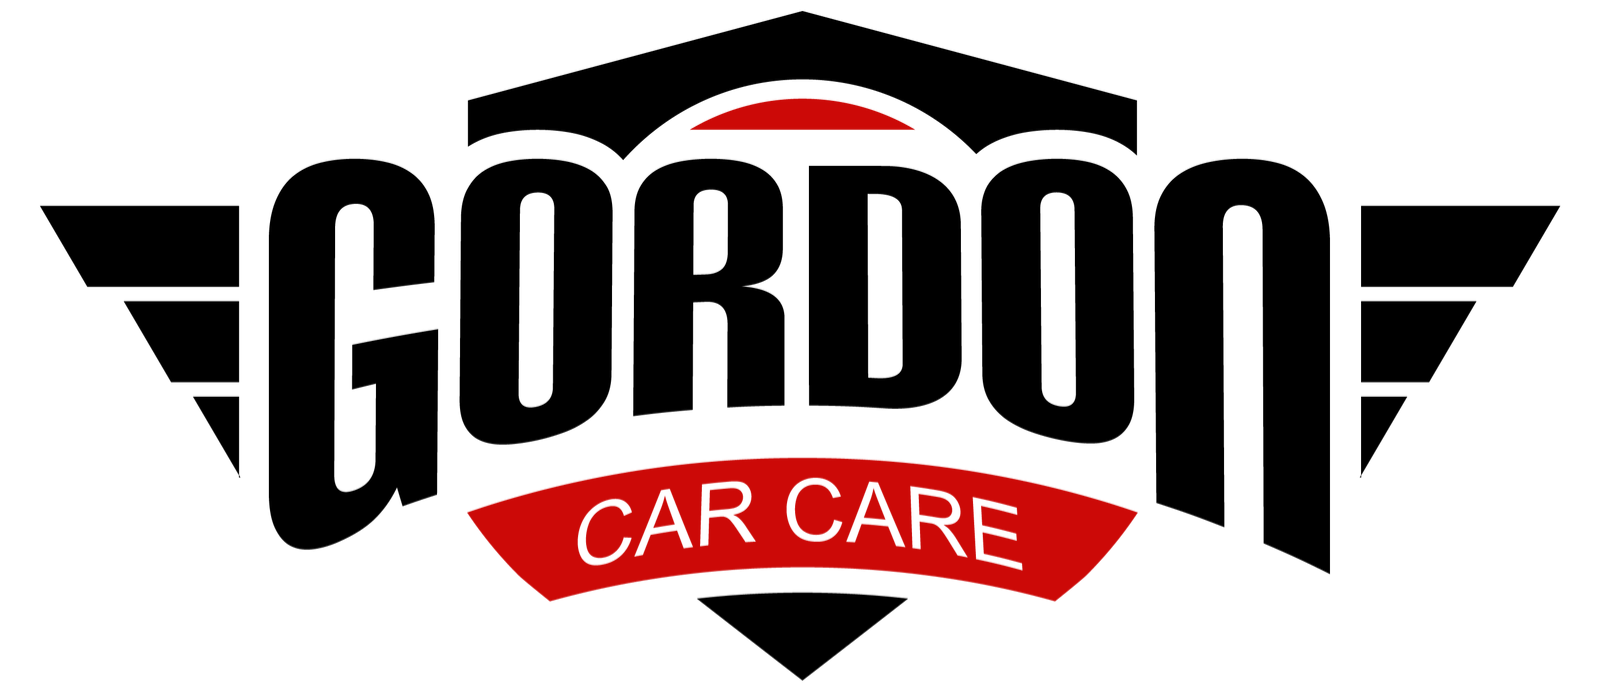 Car Care – West Coast Customs Online Store